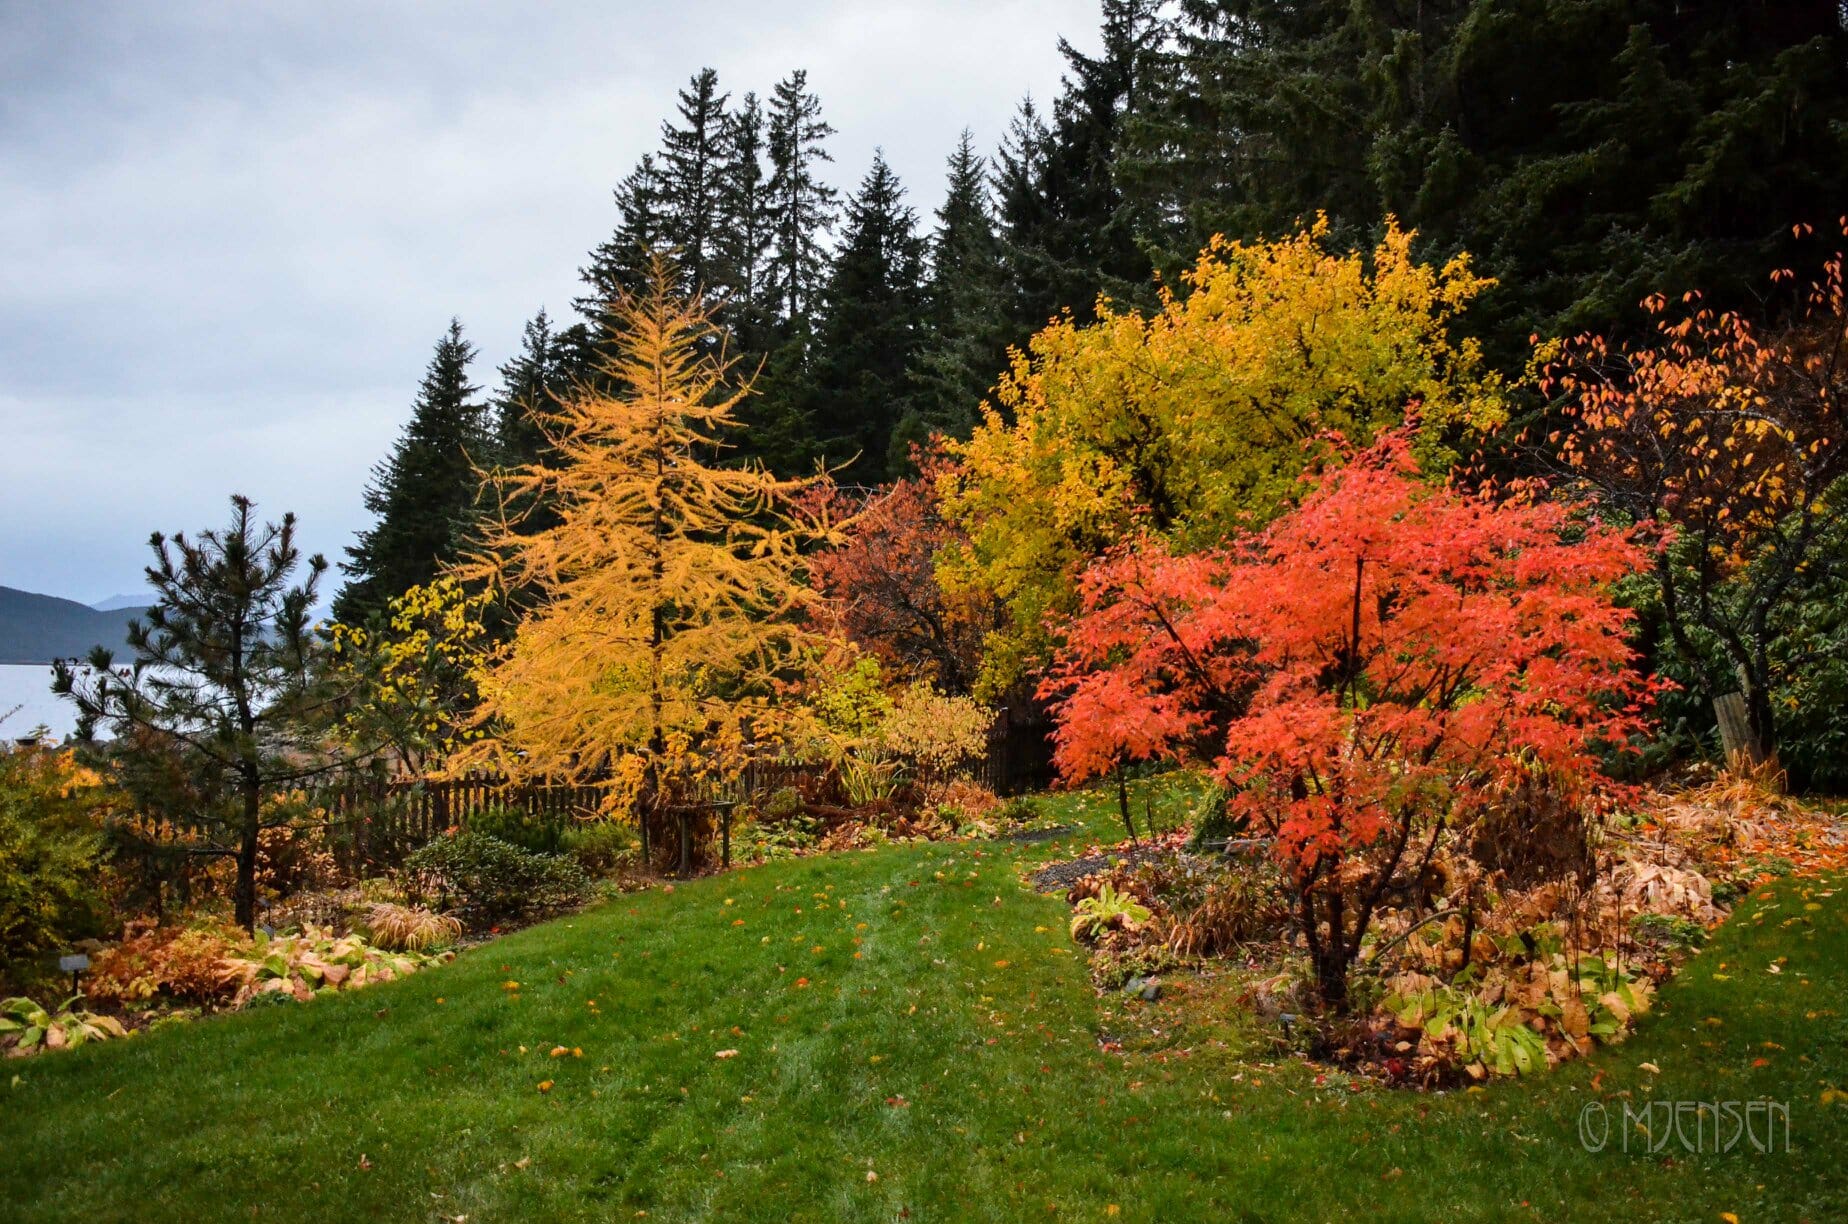 Fall leaves on the trees at the Jensen-Olson Arboretum